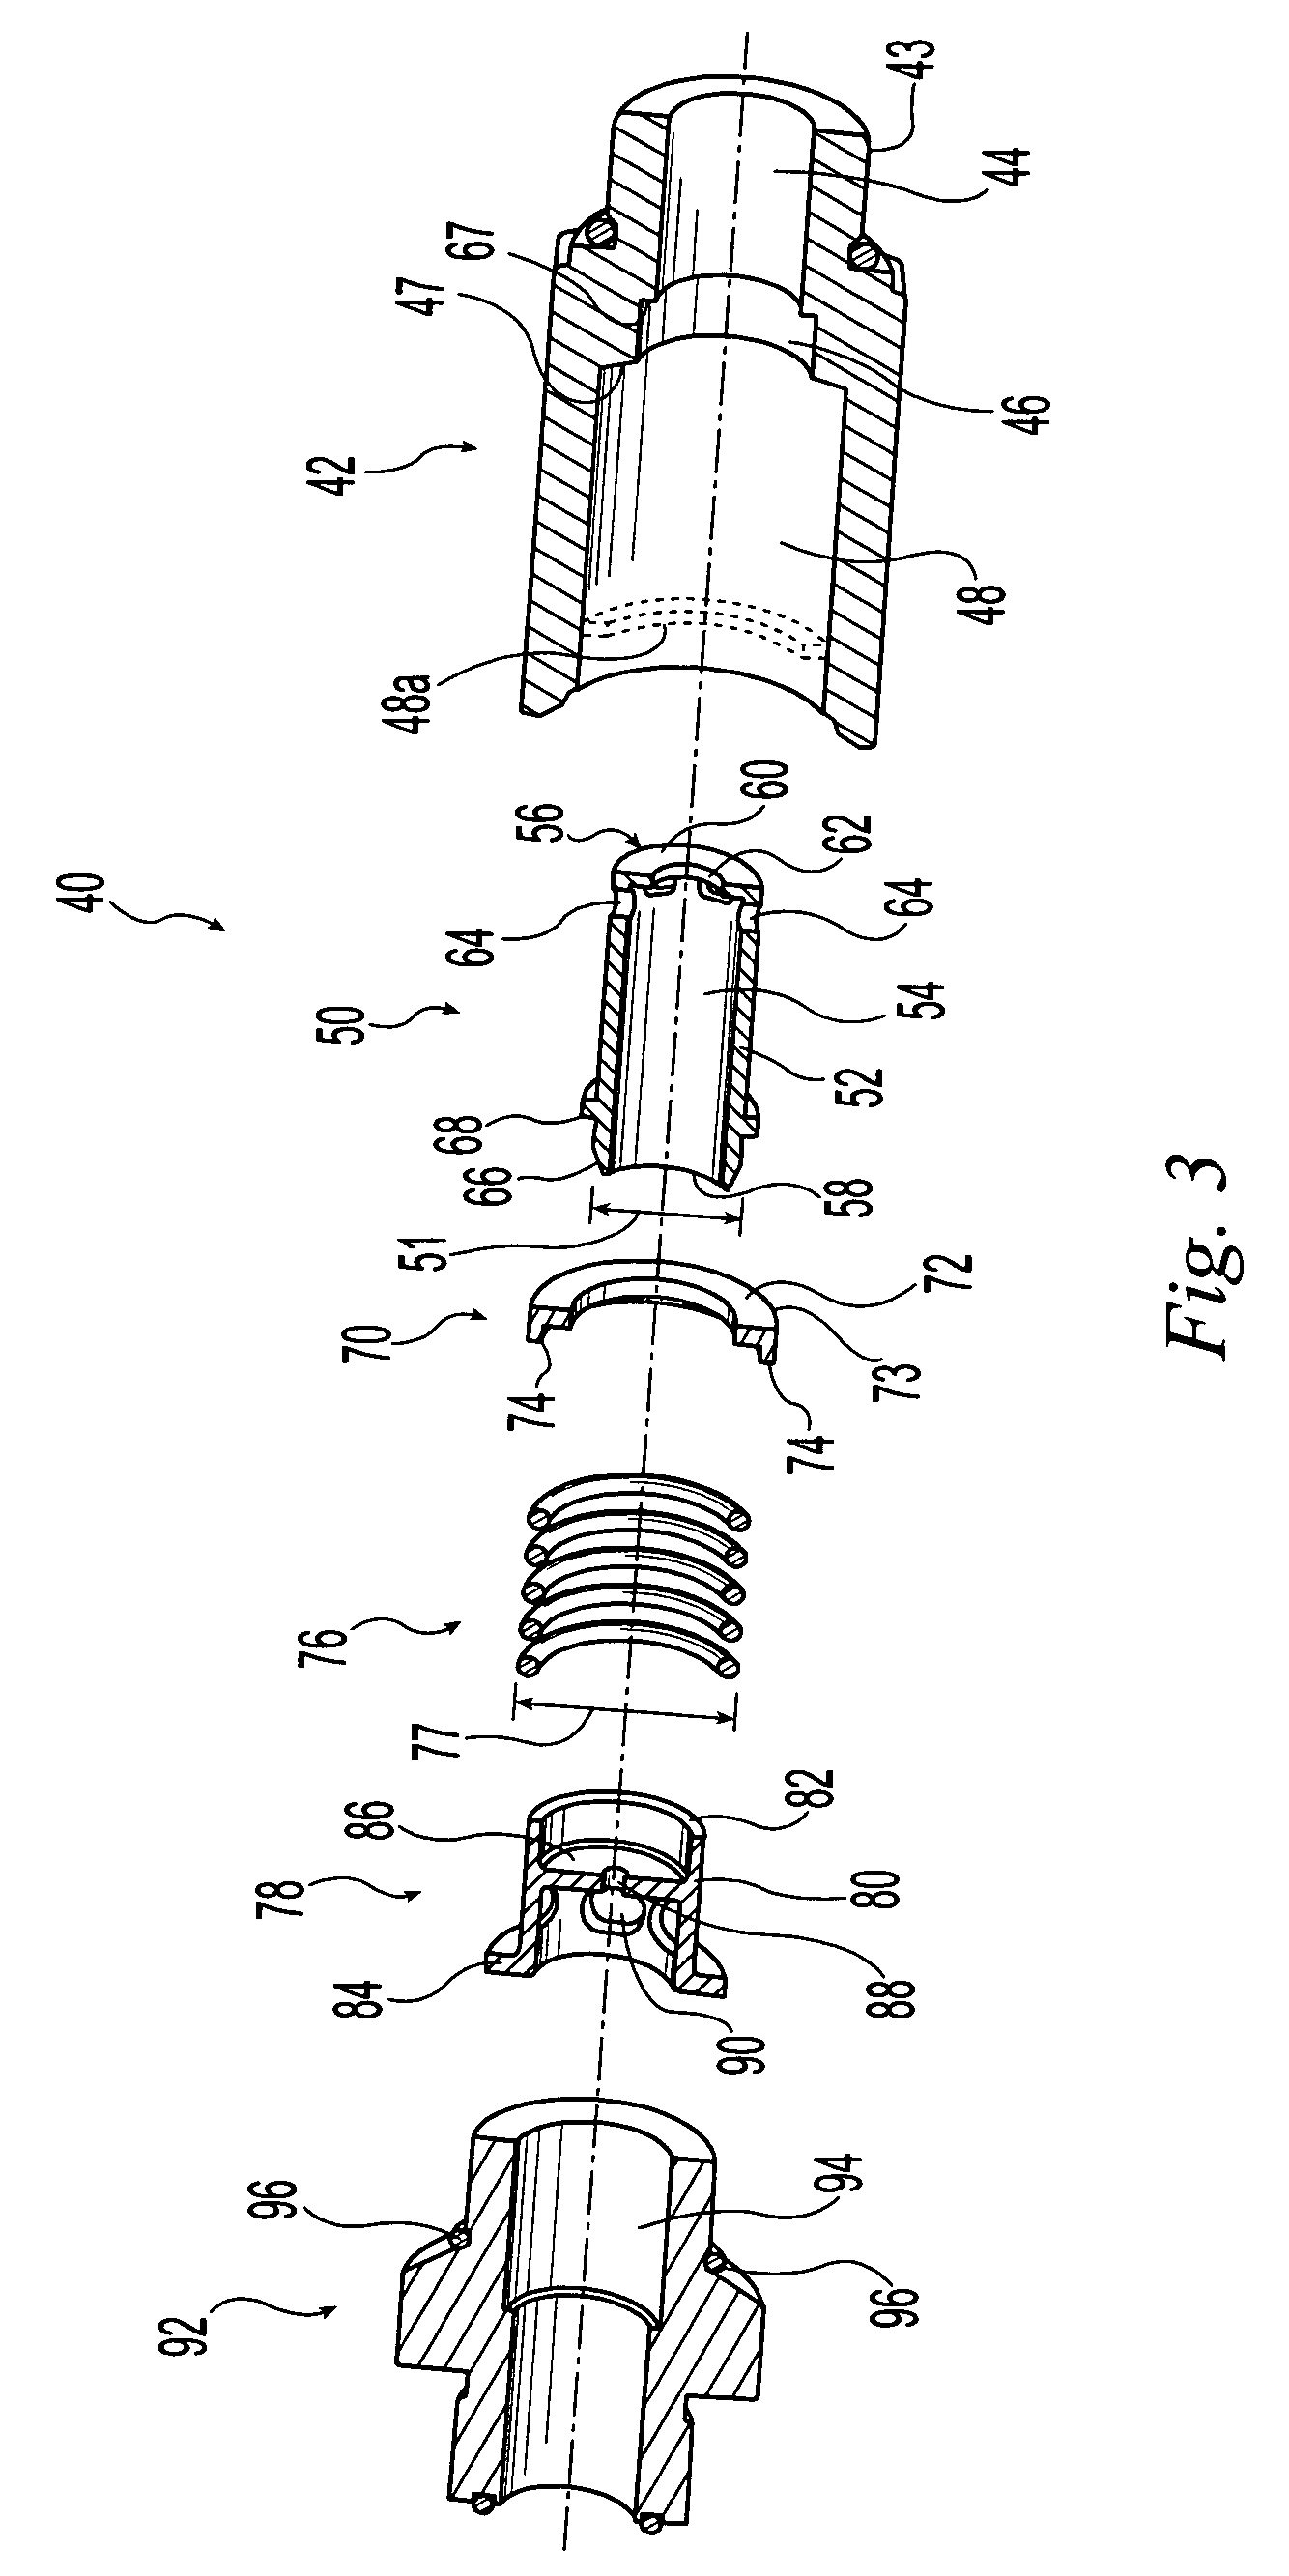 Flow regulating valve